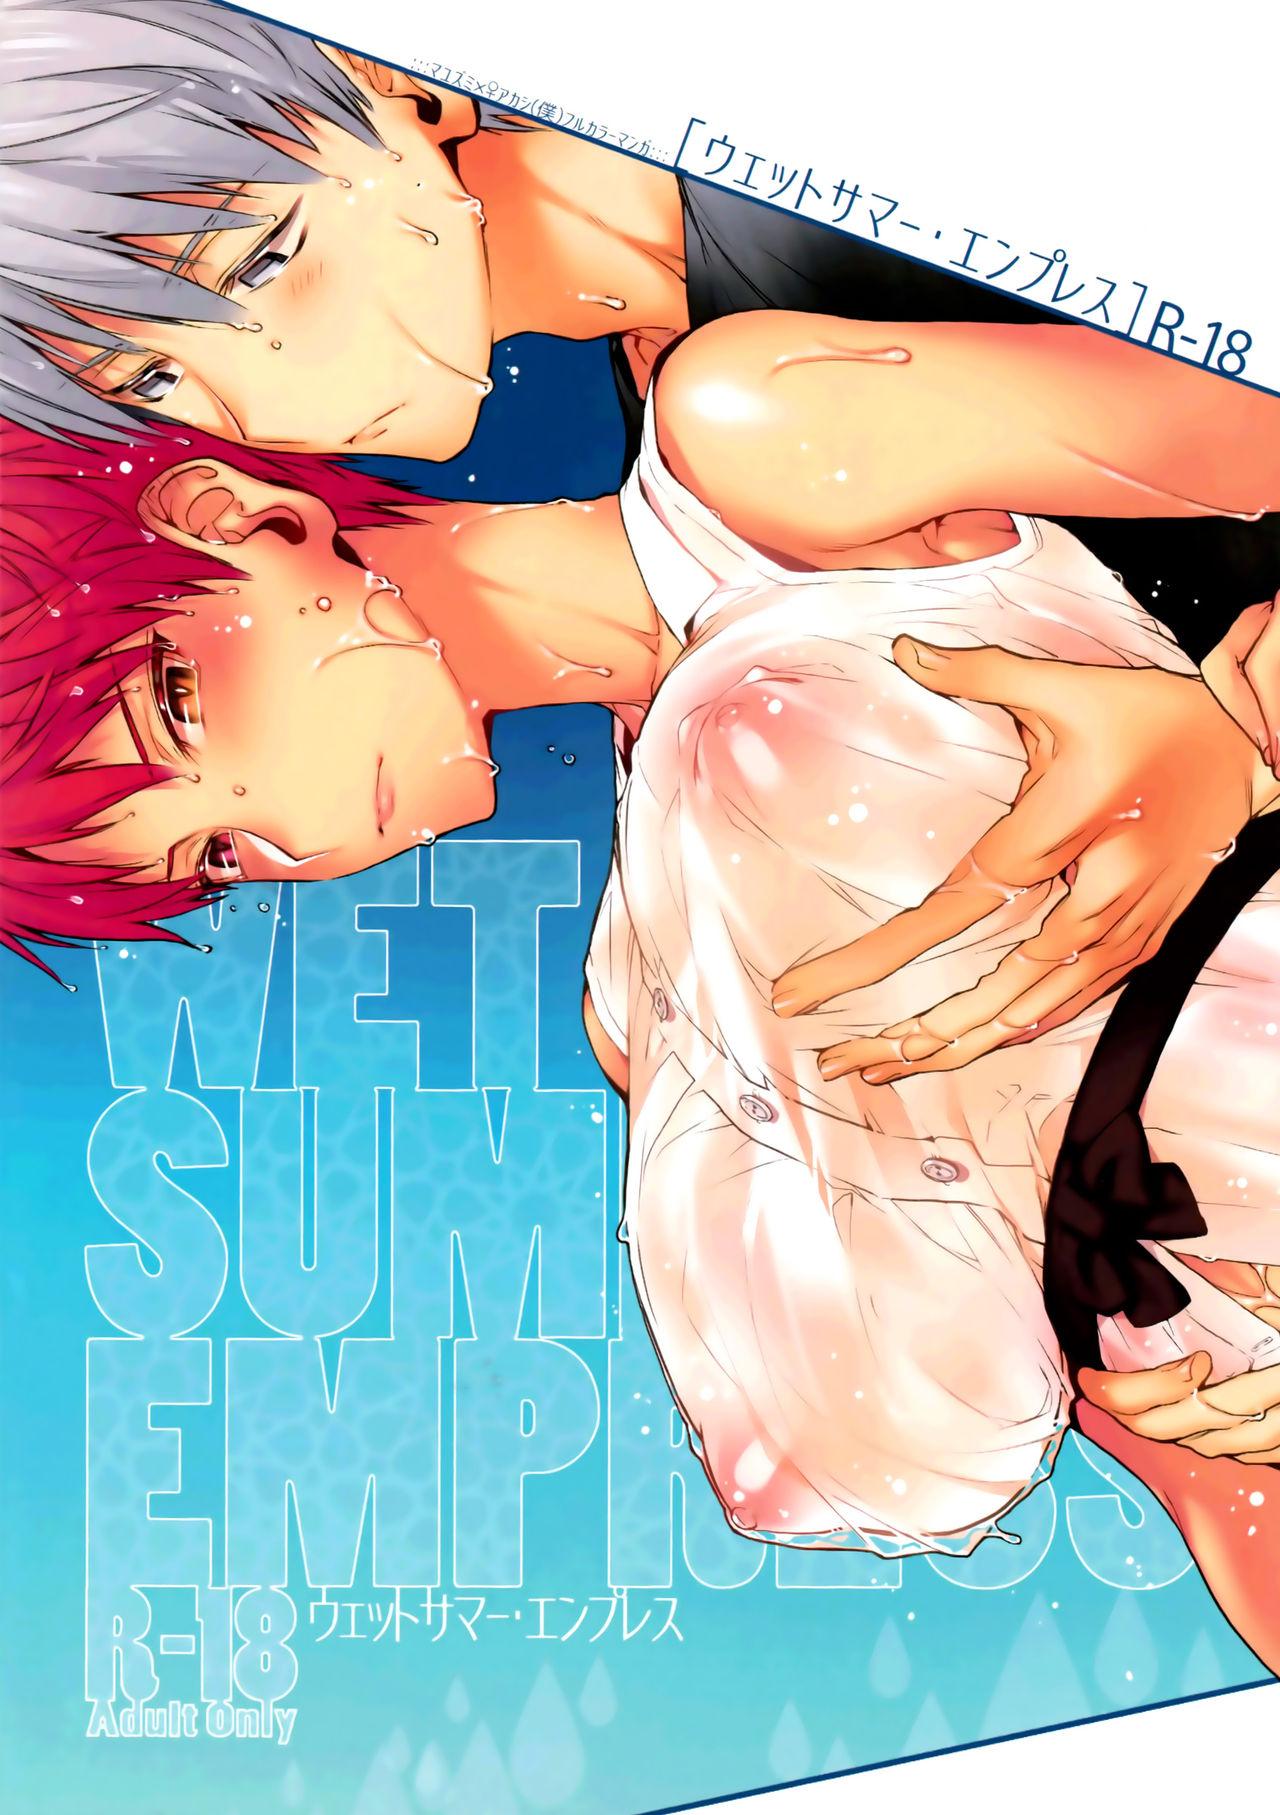 Deutsch Wet Summer Empress - Kuroko no basuke 18 Year Old - Page 1